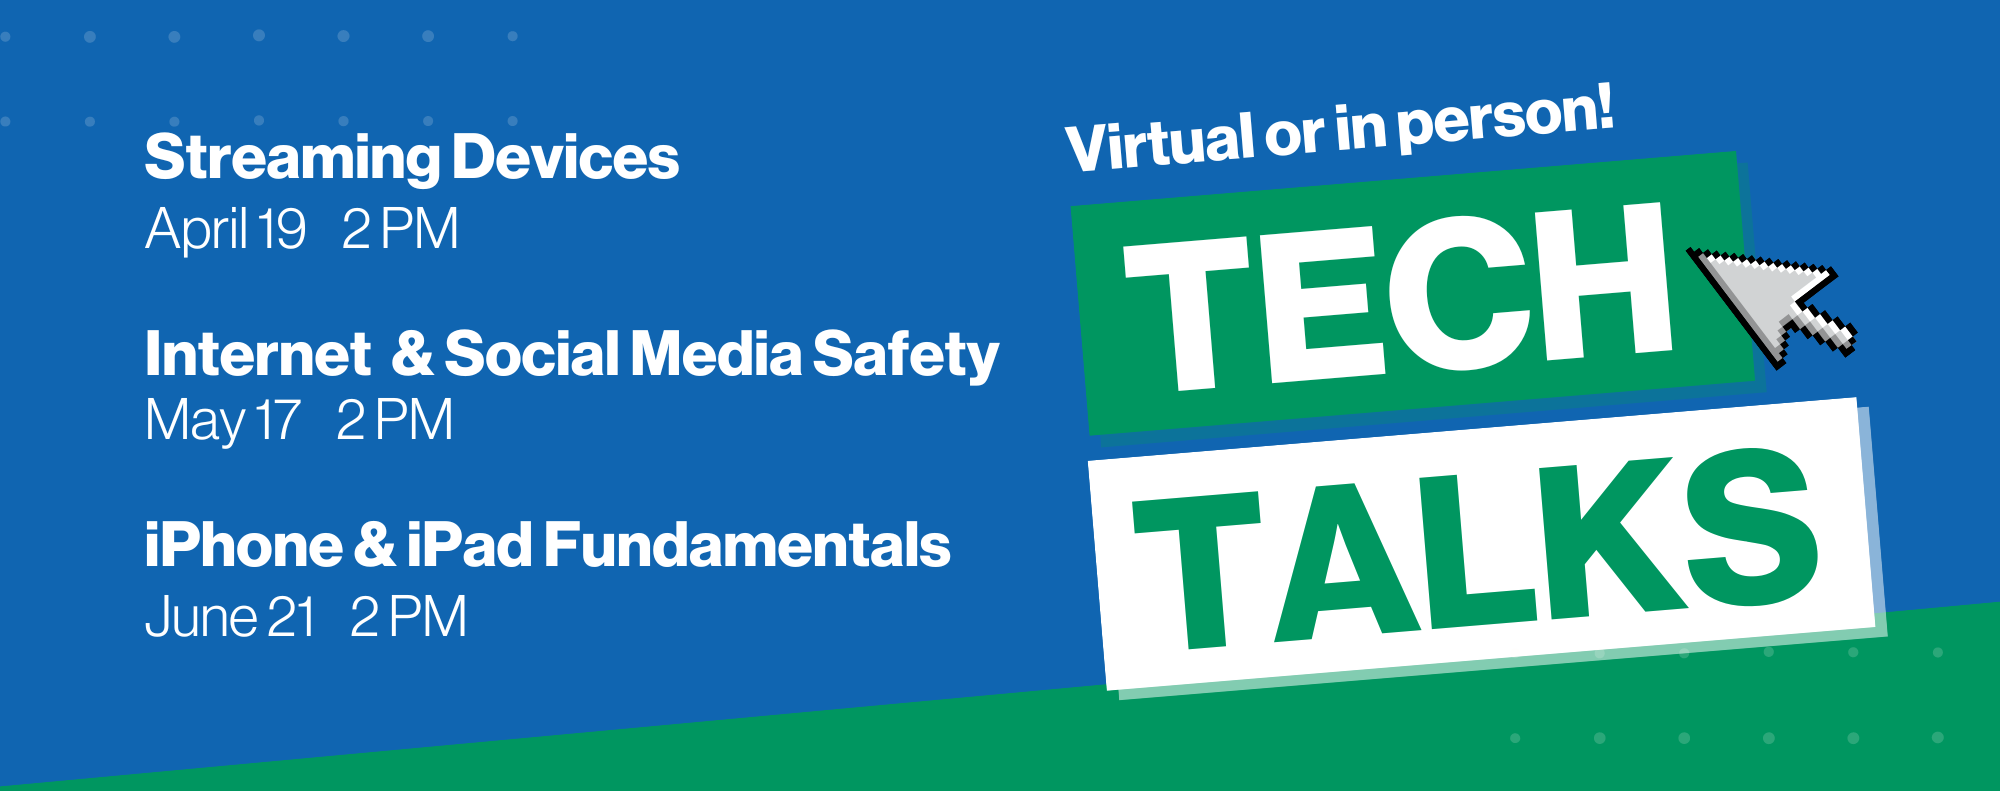 Tech Talks - Virtual or in person